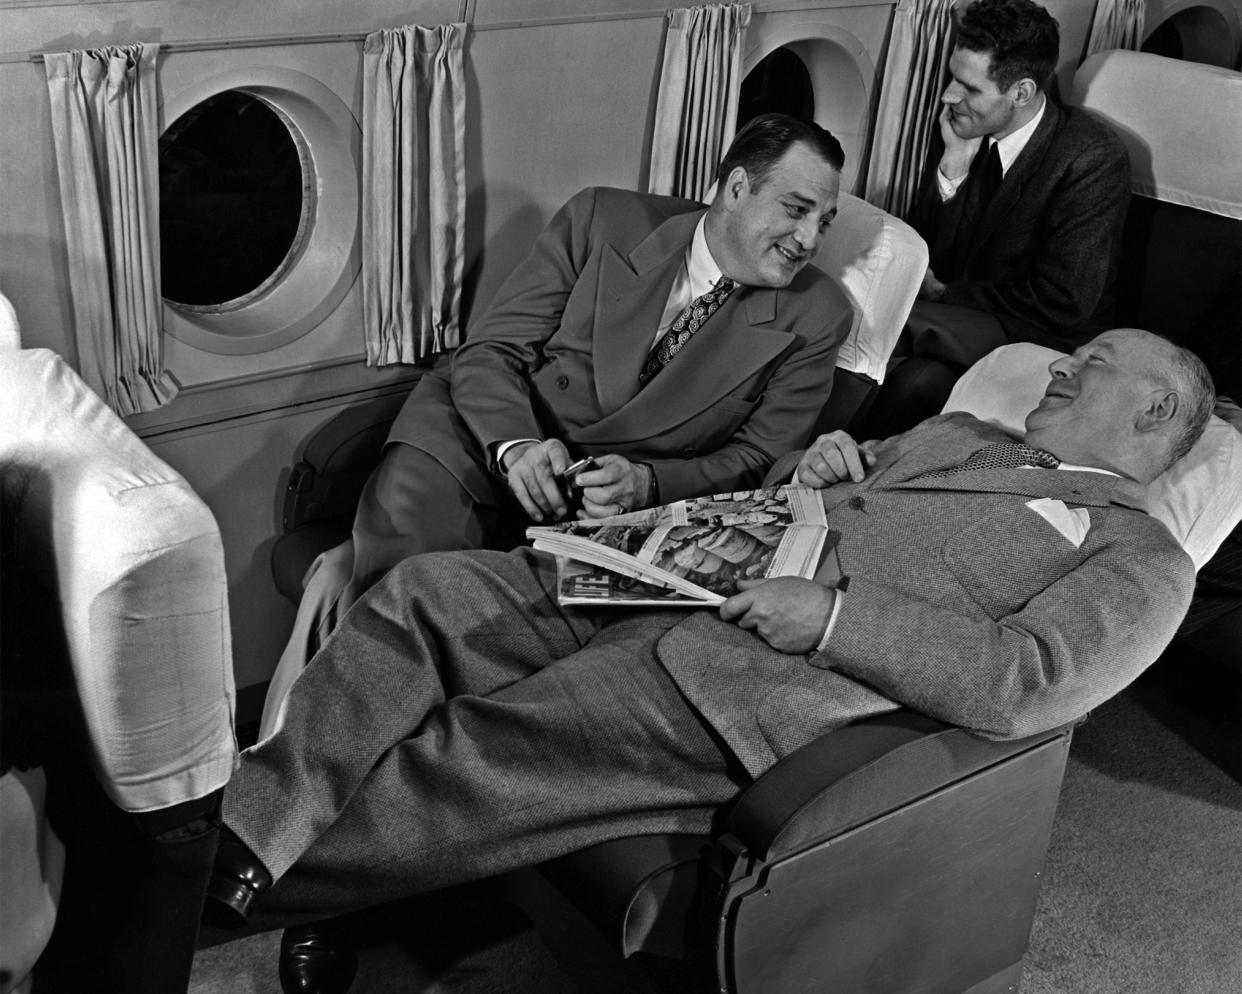 Passengers relaxing on an airline flight, circa 1950.